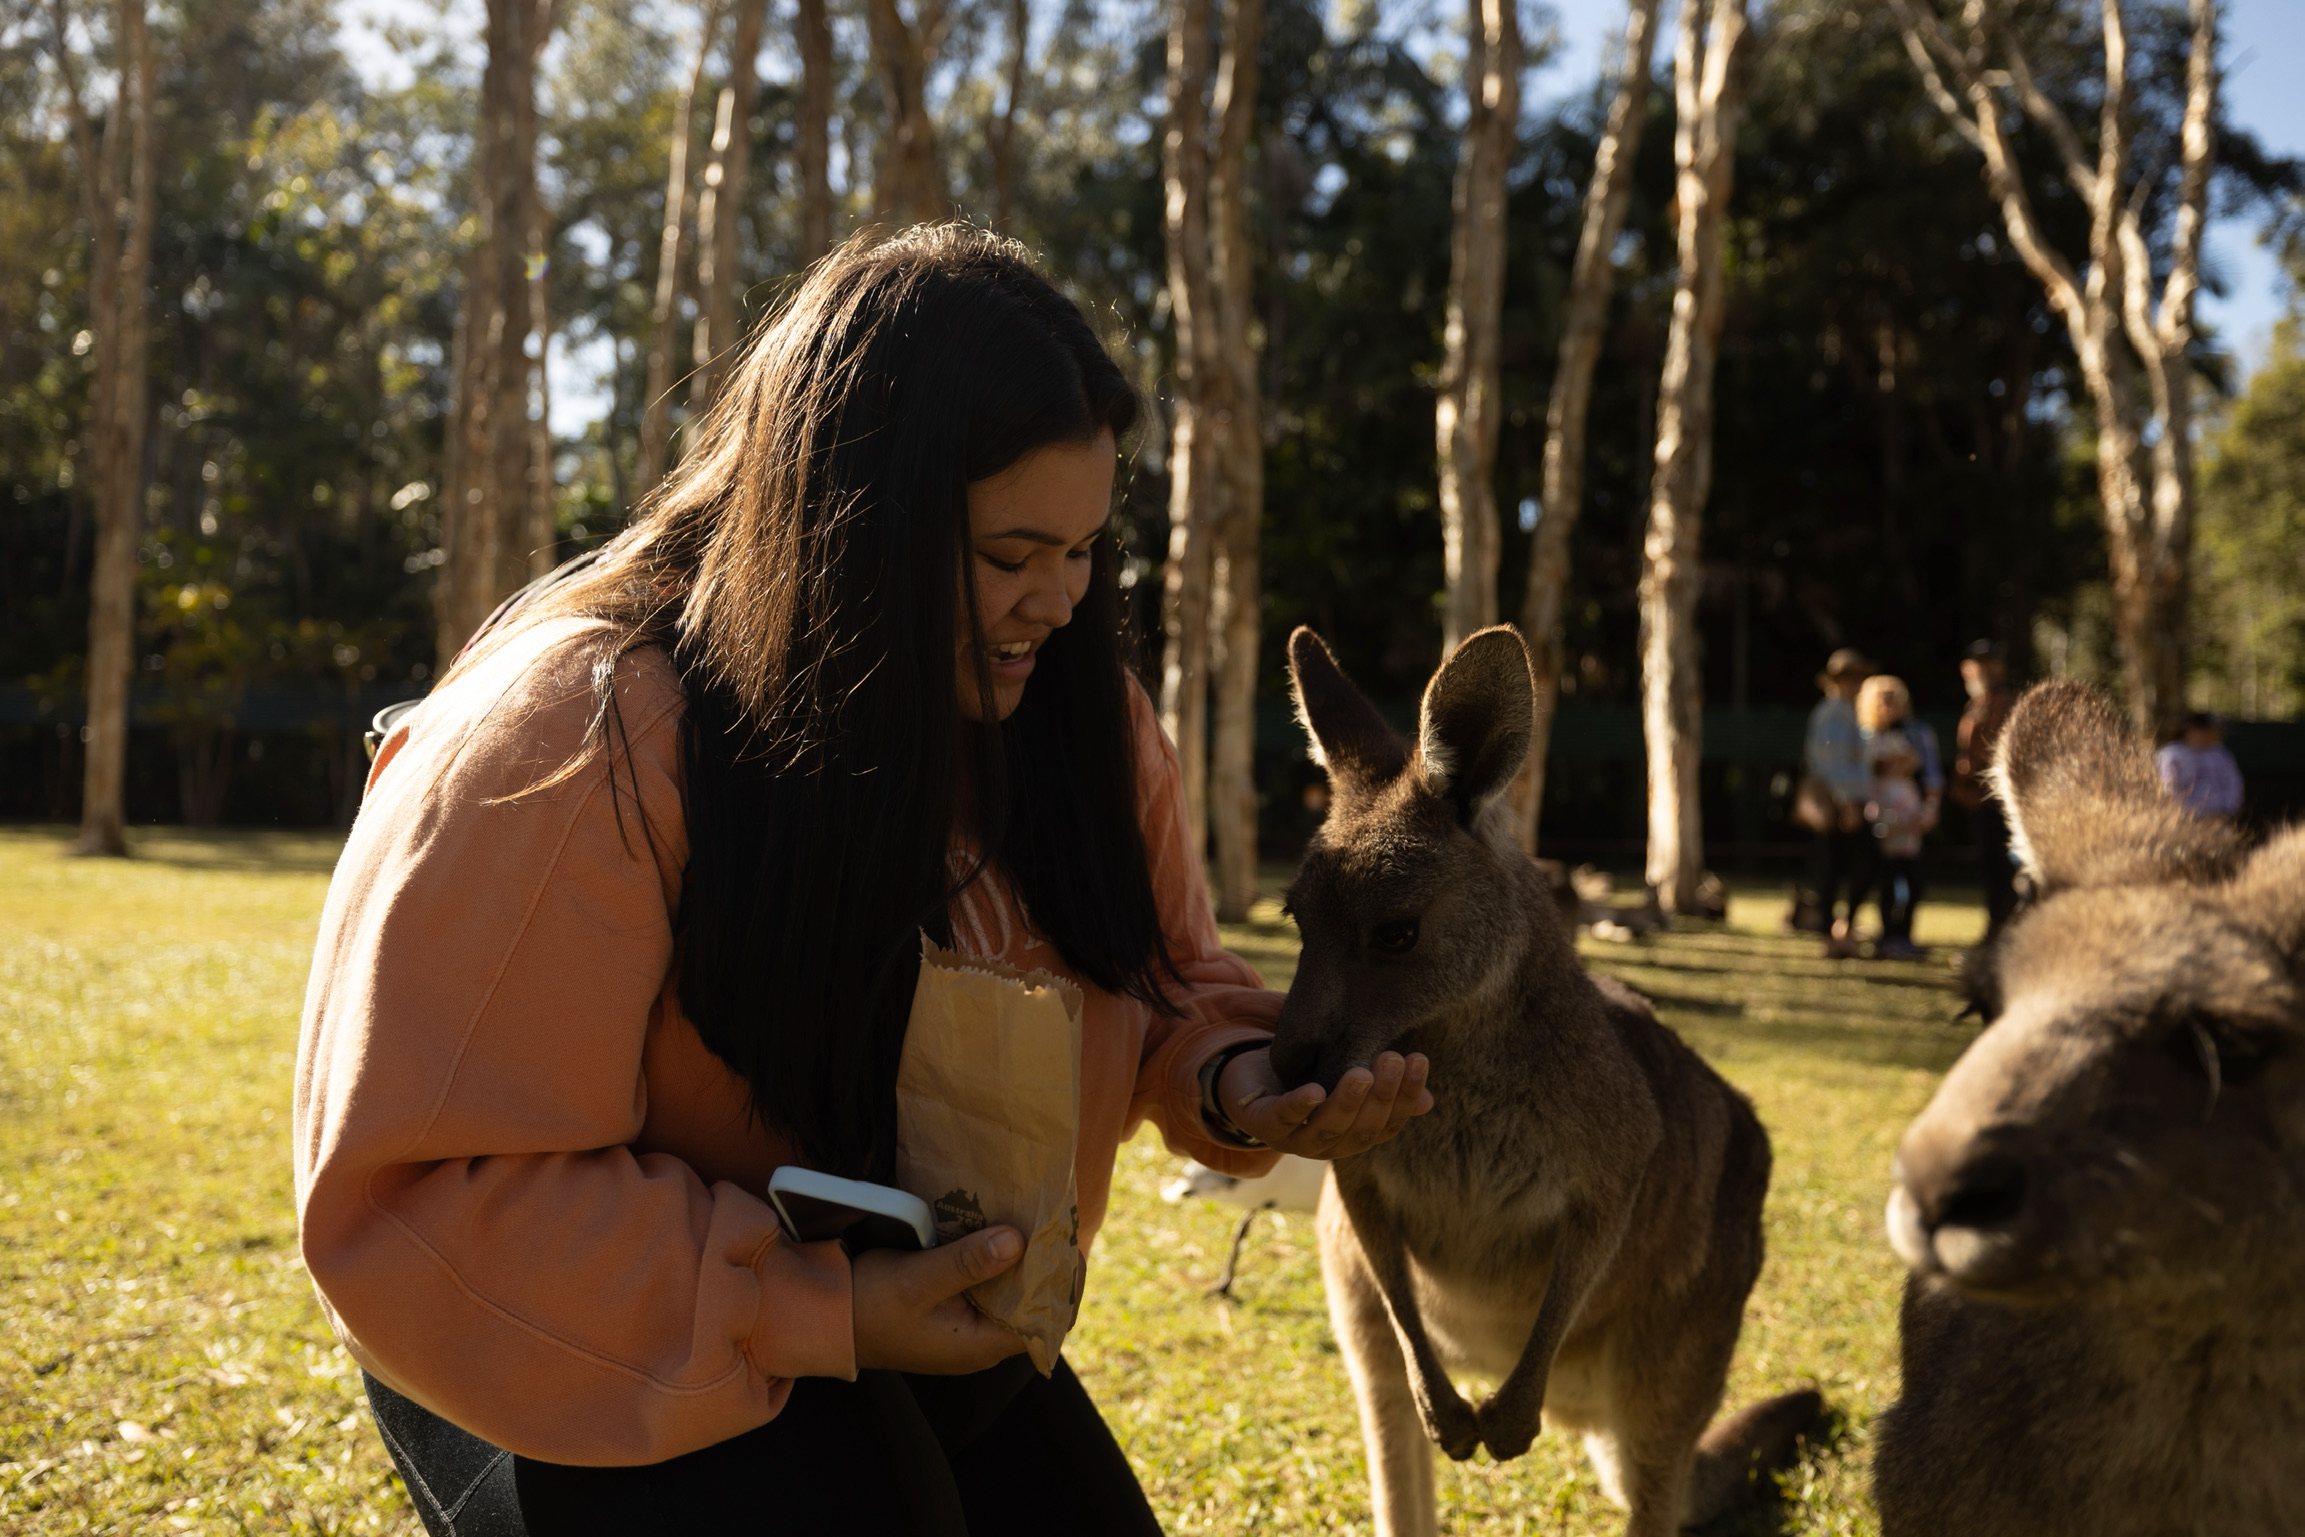 Feeding the kangaroos at the Australia Zoo in Beerwah, QLD